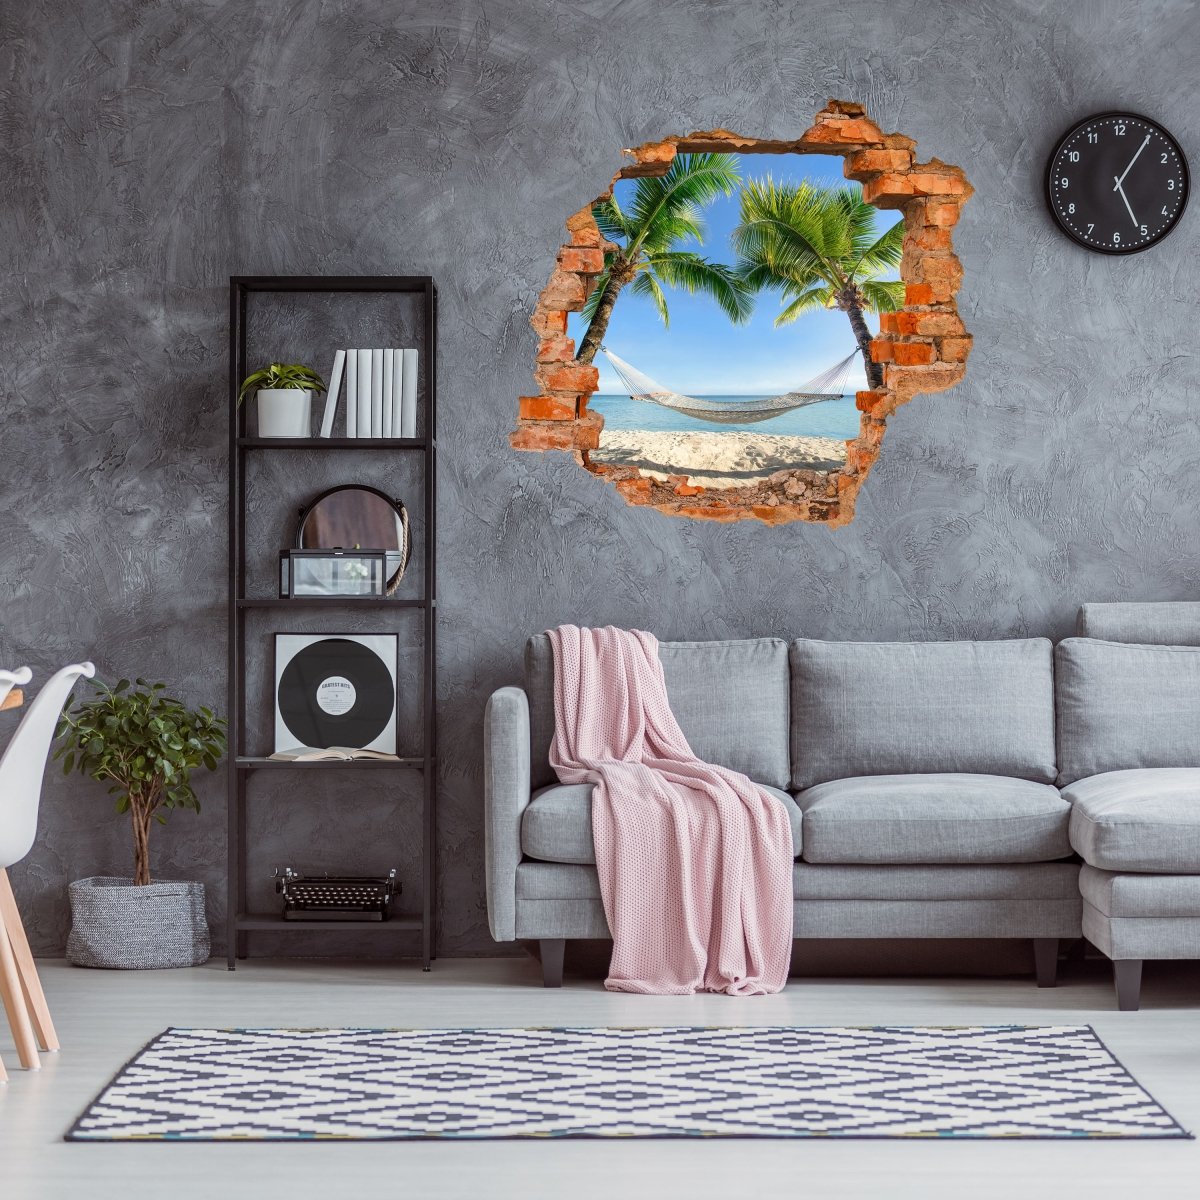 3D wall sticker hammock between palm trees, sea, island - Wall Decal M1153